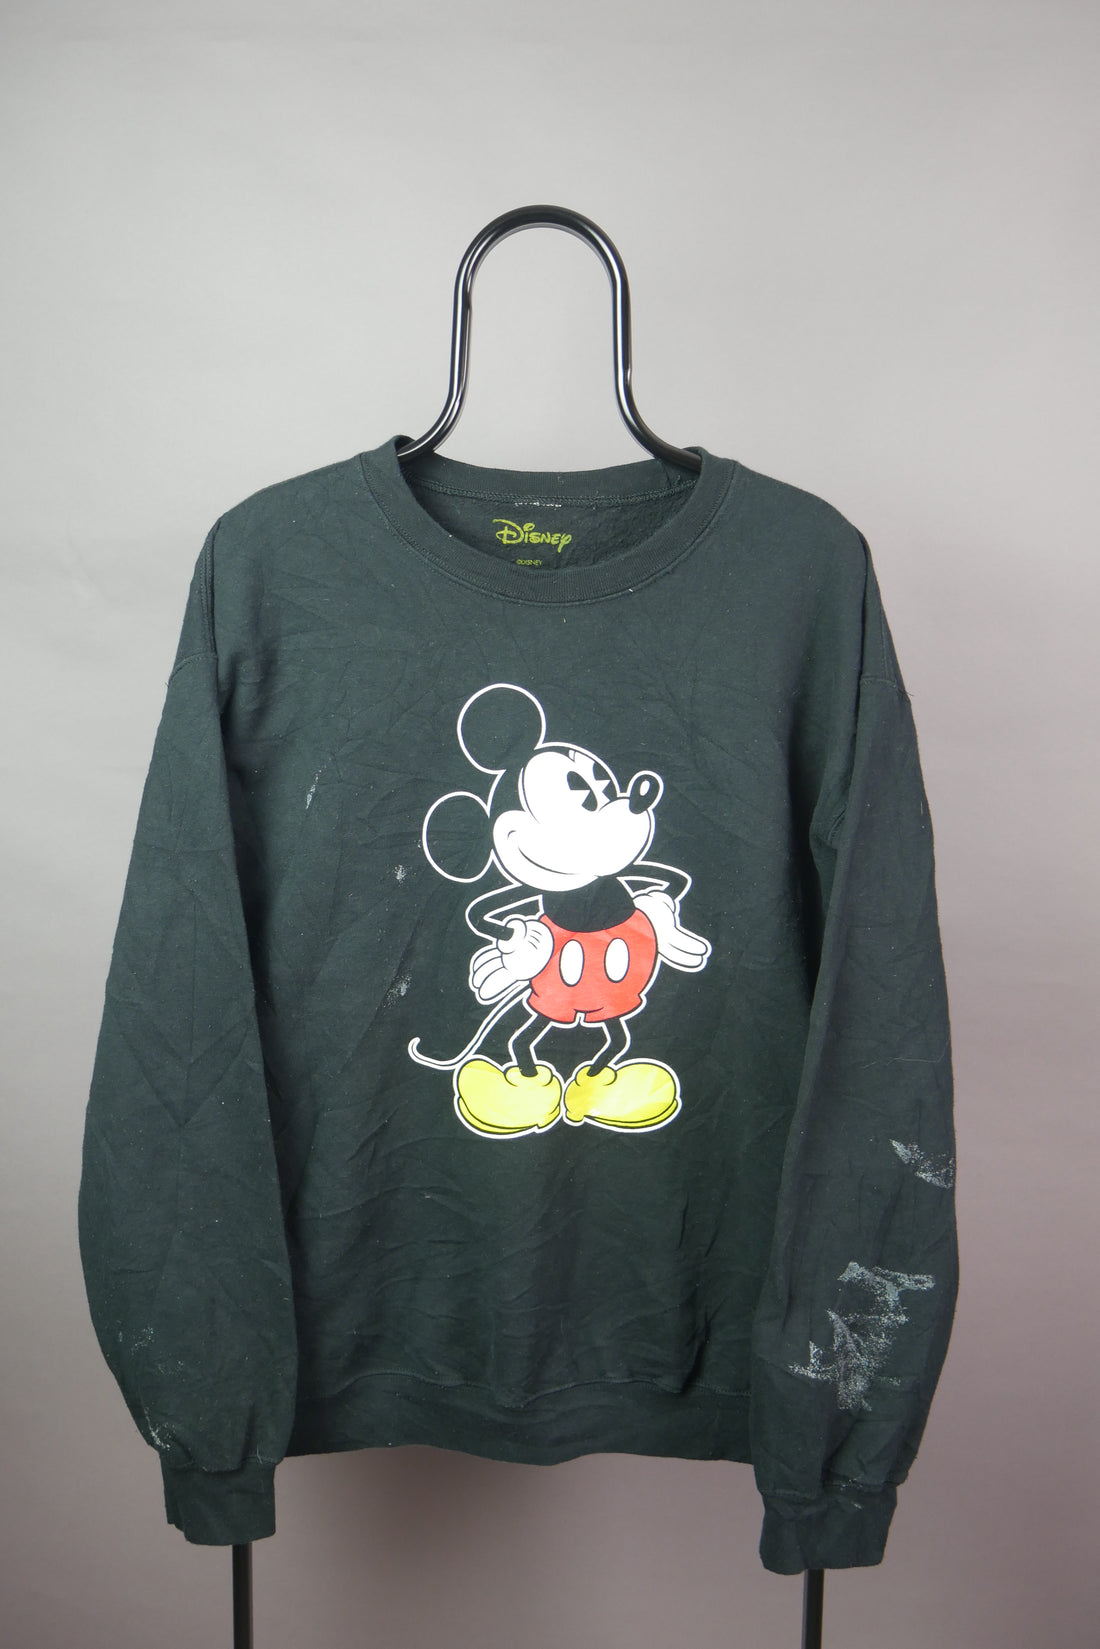 The Disney Mickey Graphic Sweatshirt (L)